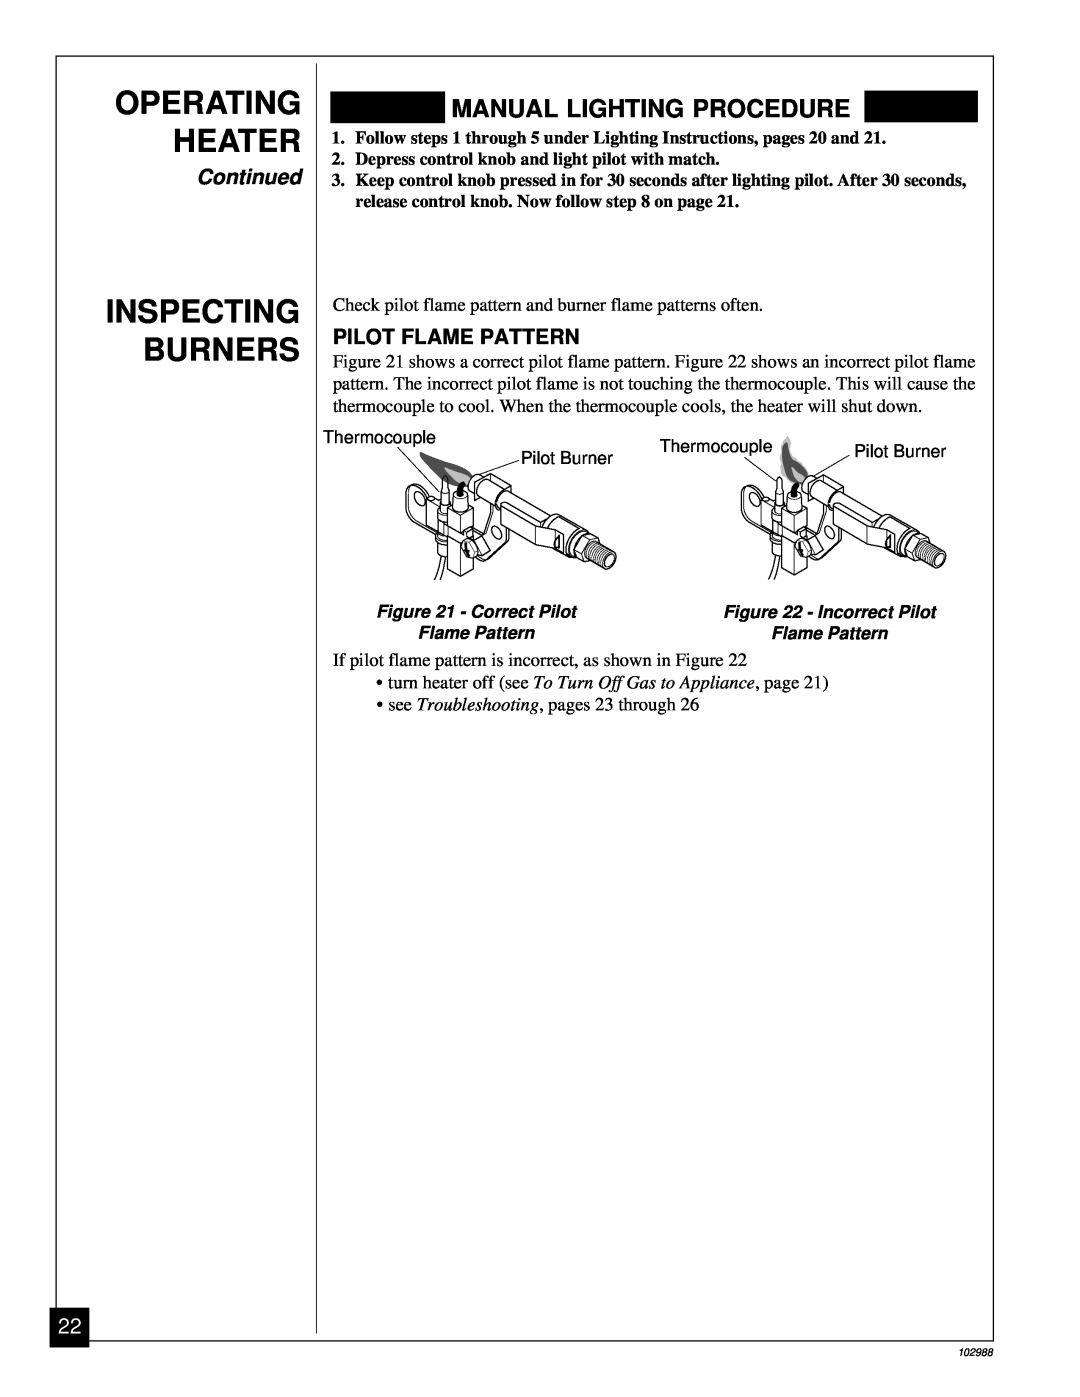 Desa CGS2718N installation manual Inspecting Burners, Operating Heater, Manual Lighting Procedure, Continued 